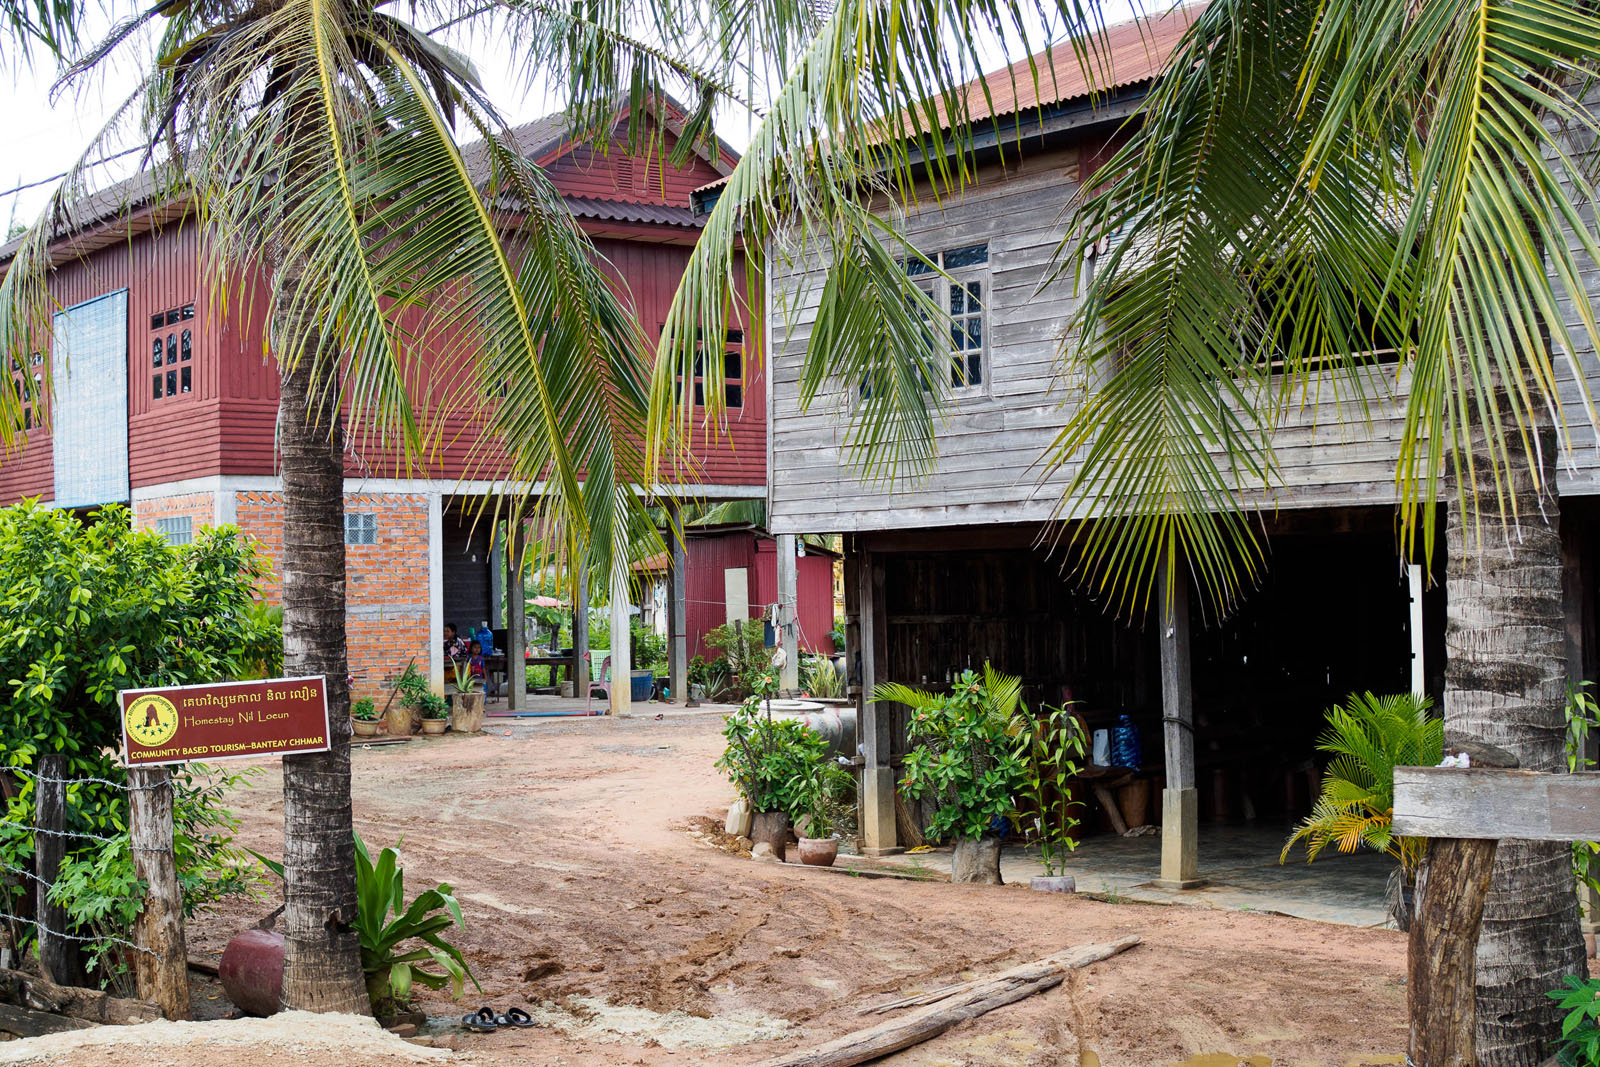 Siev Sem & Nil Loeun Homestay, one of eight homestays in Banteay Chhmar. Photo by Emily Lush